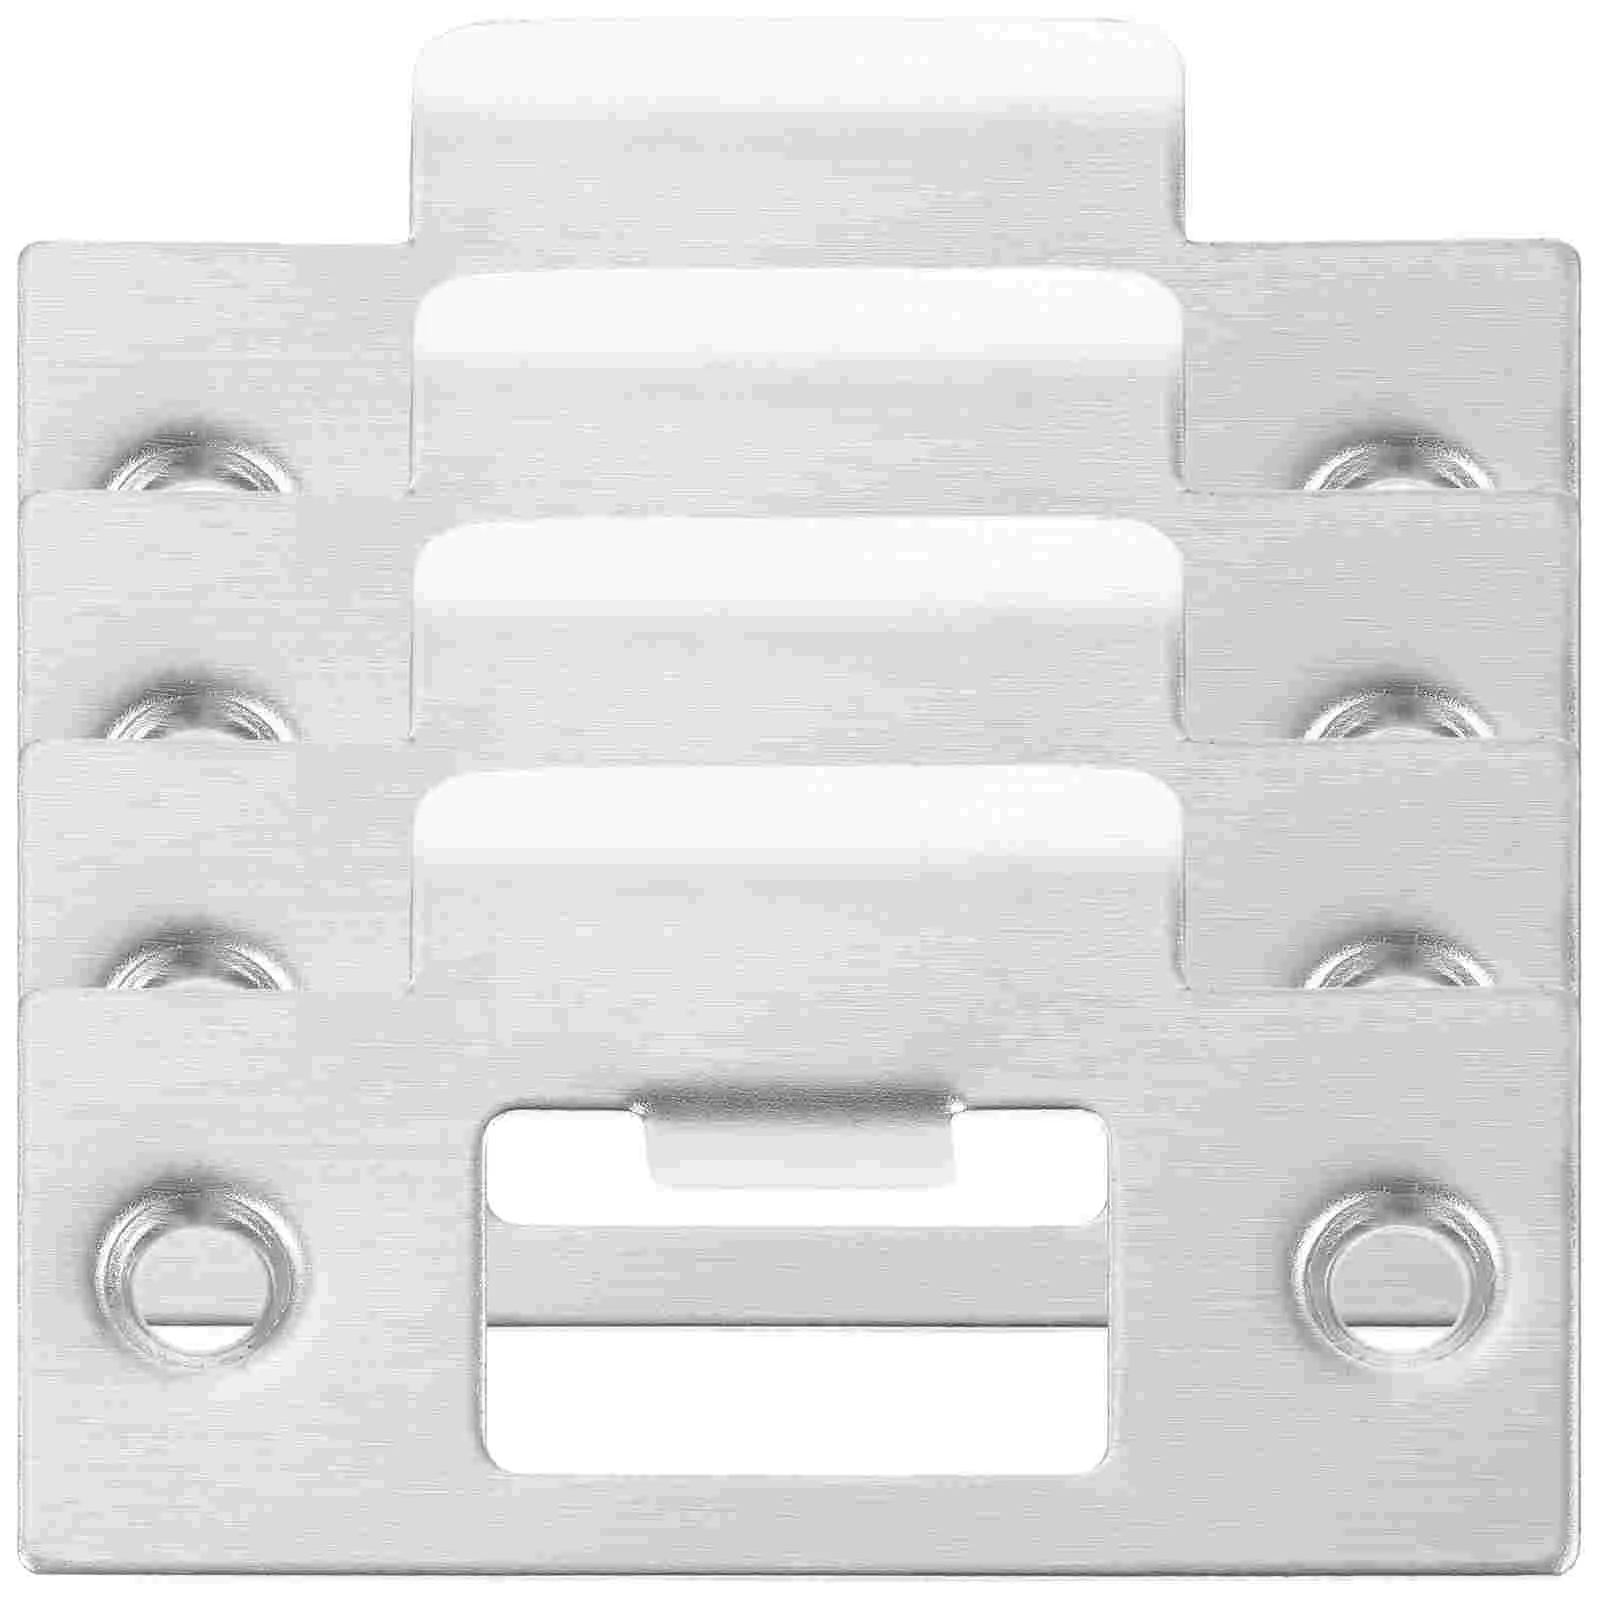 

4 Pcs Door Strike Plate Filler Garage Reinforcement Plates Locks Front Striker Accessories Hole Cover Kit